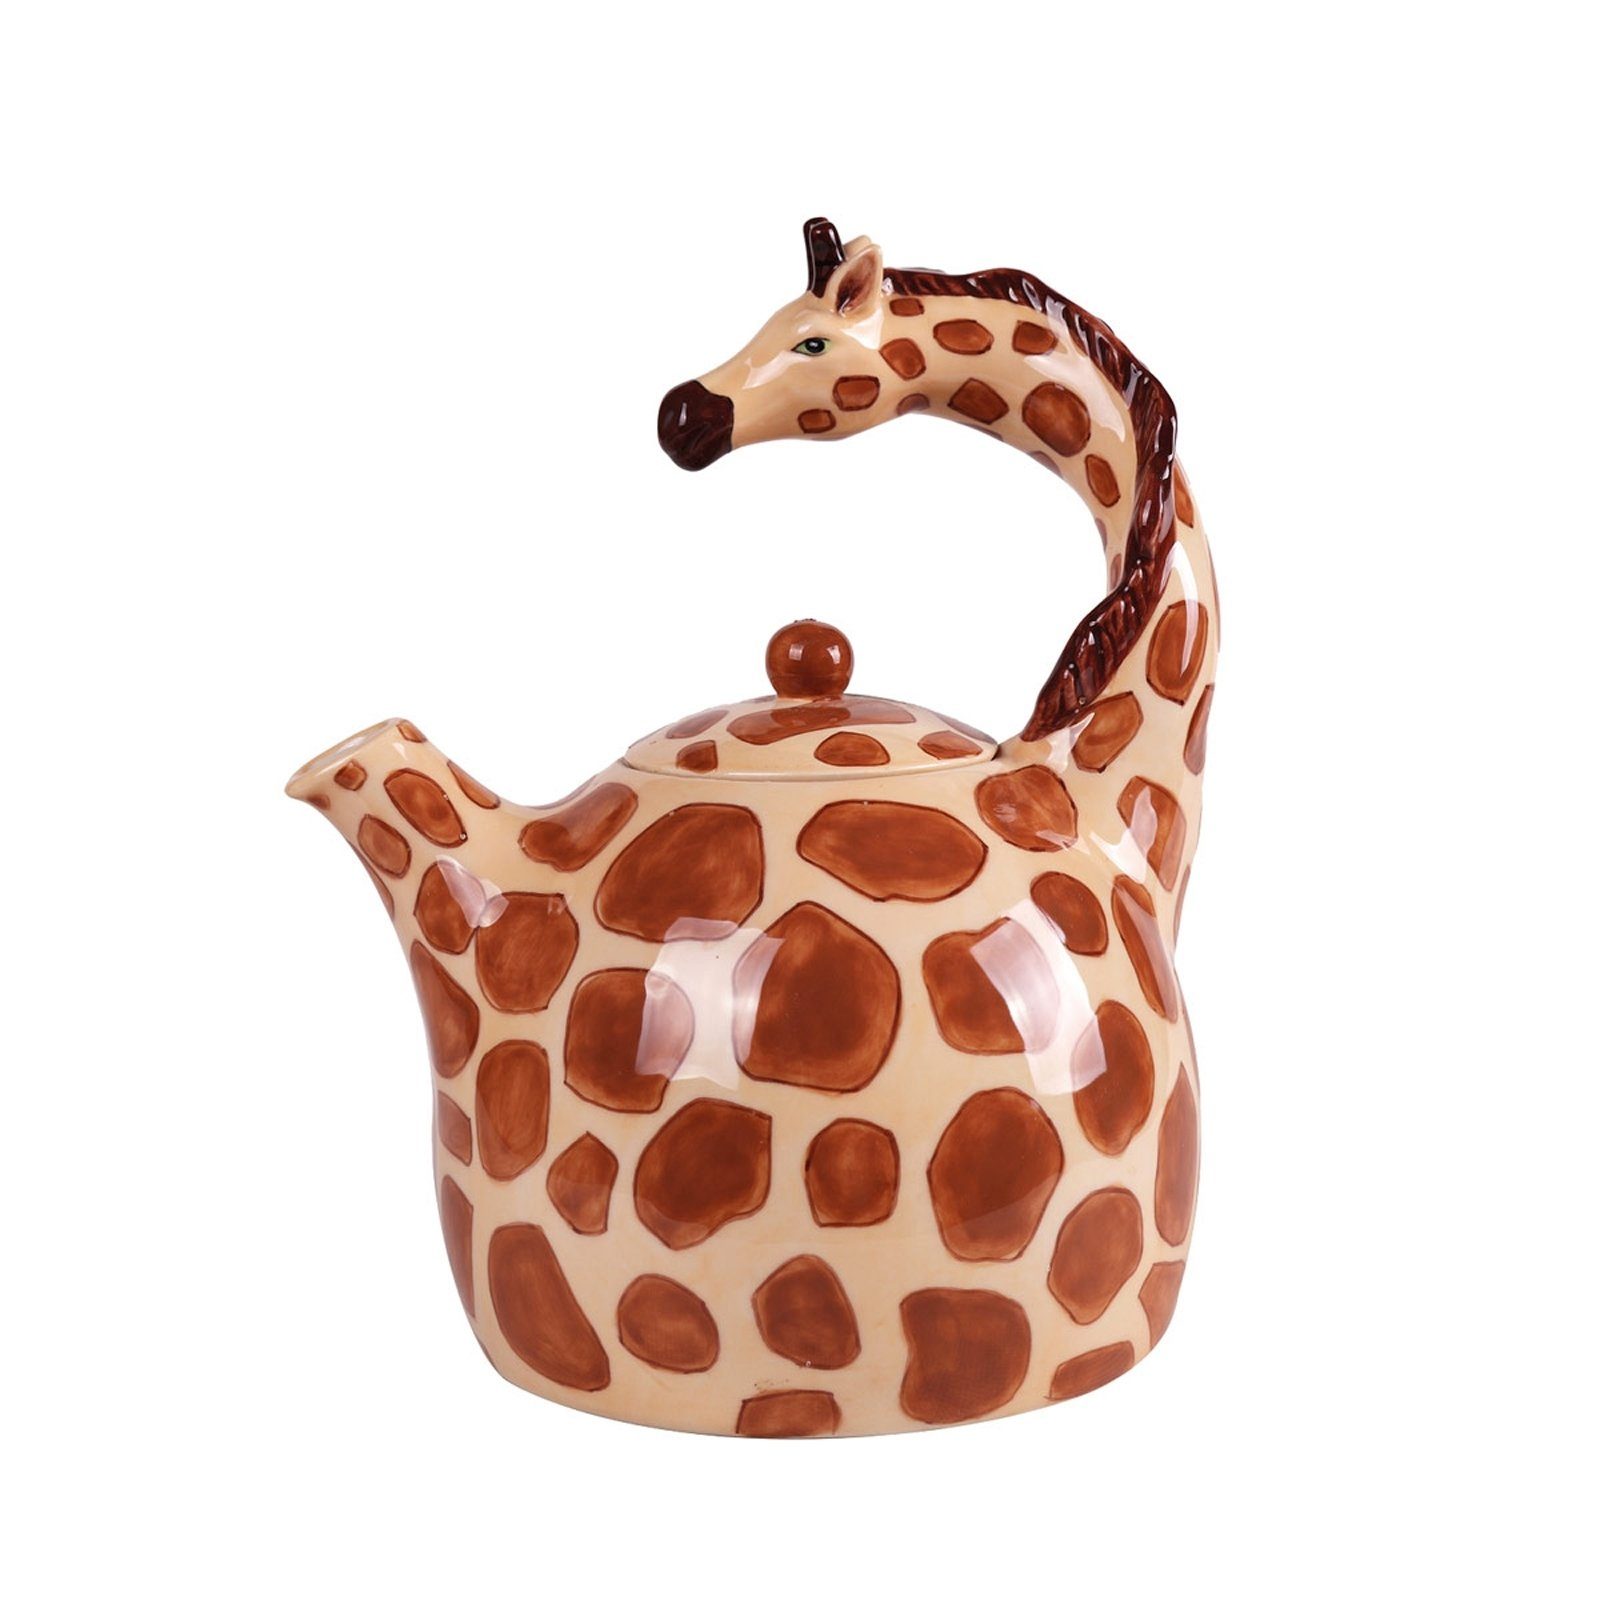 Aktionspreis Jameson + 1.2 braun Giraffe Porzellan (Stück, Giraffe, Stück), Tailor l, Teekanne Design-Kanne Teekanne